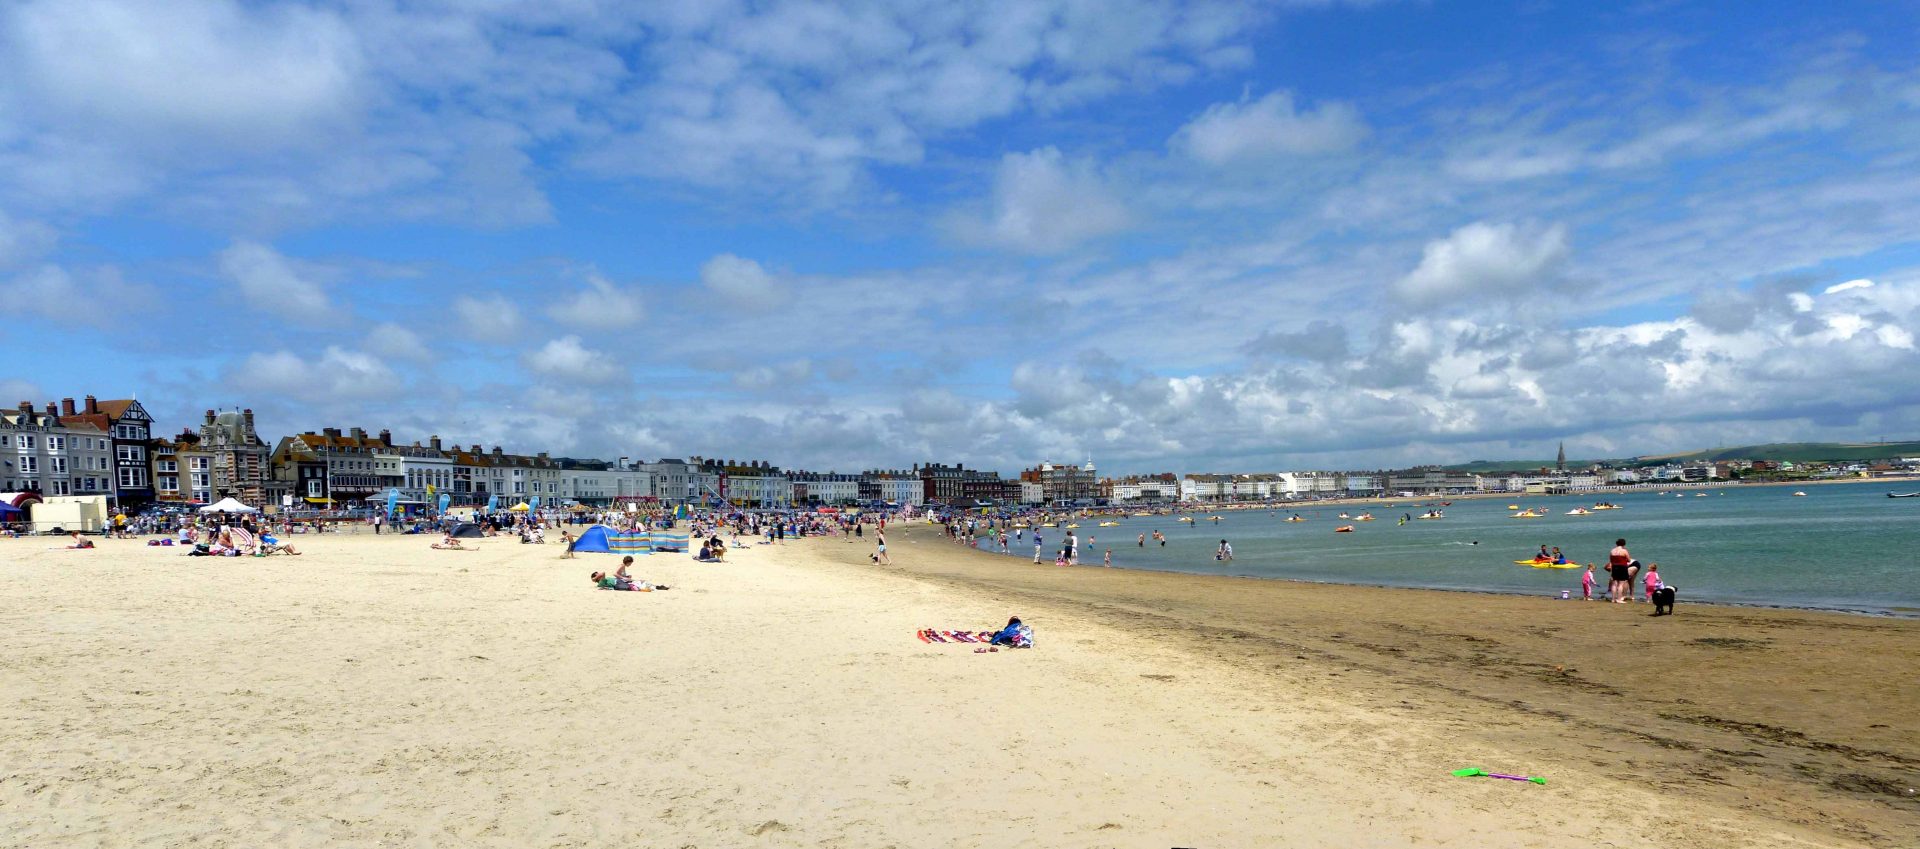 A panoramic photo of Weymouth beach